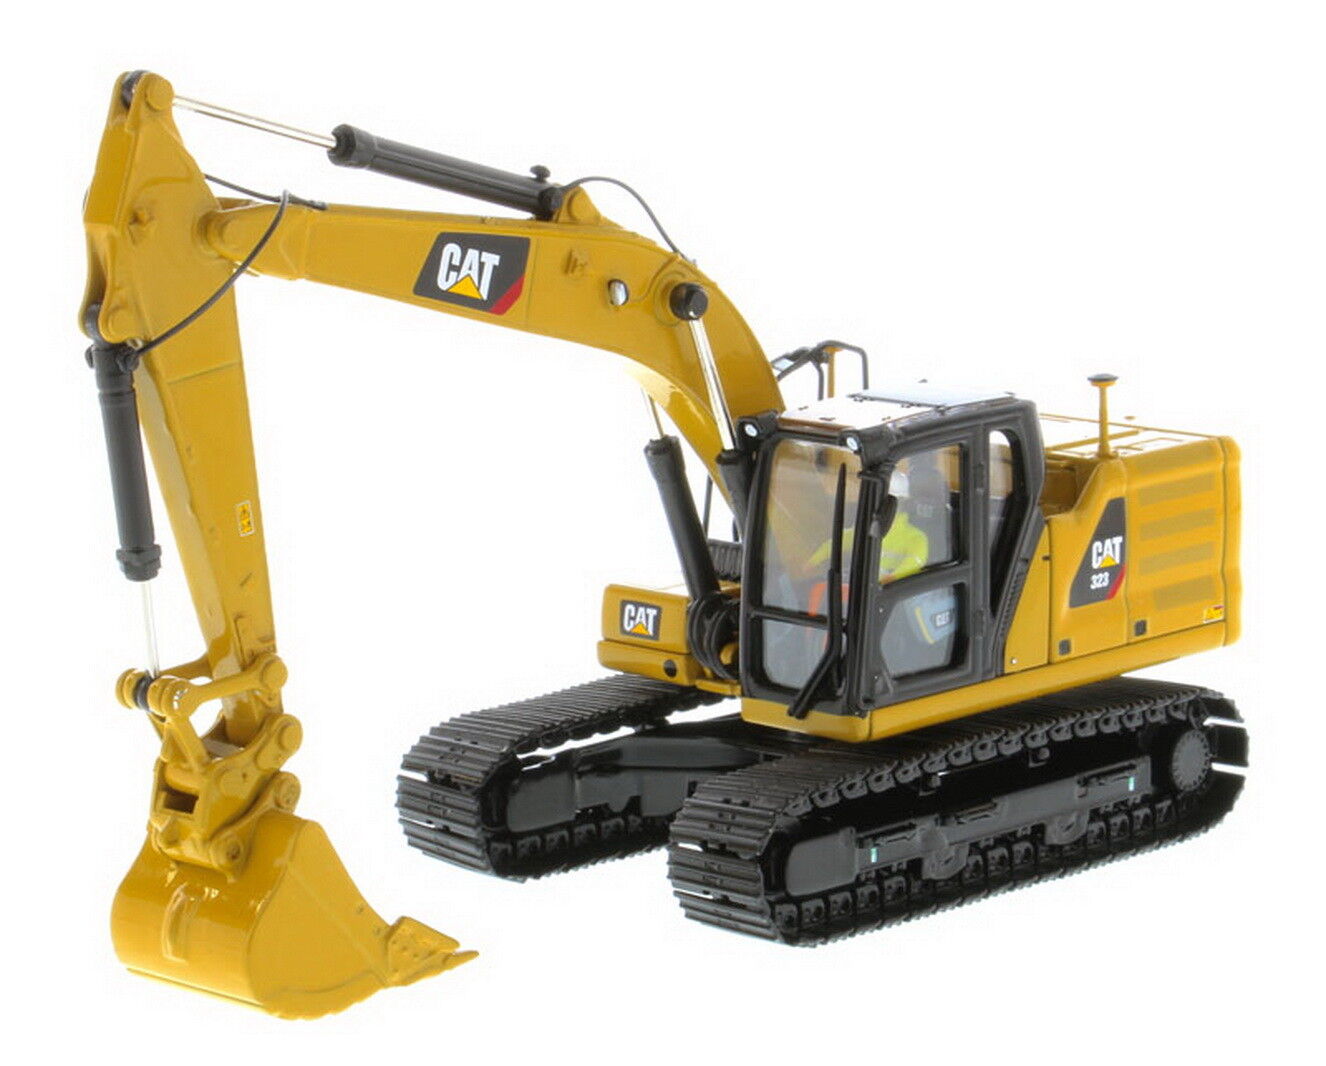 1/50 DM Caterpillar Cat 323 Hydraulic Excavator Next Generation Models #85571